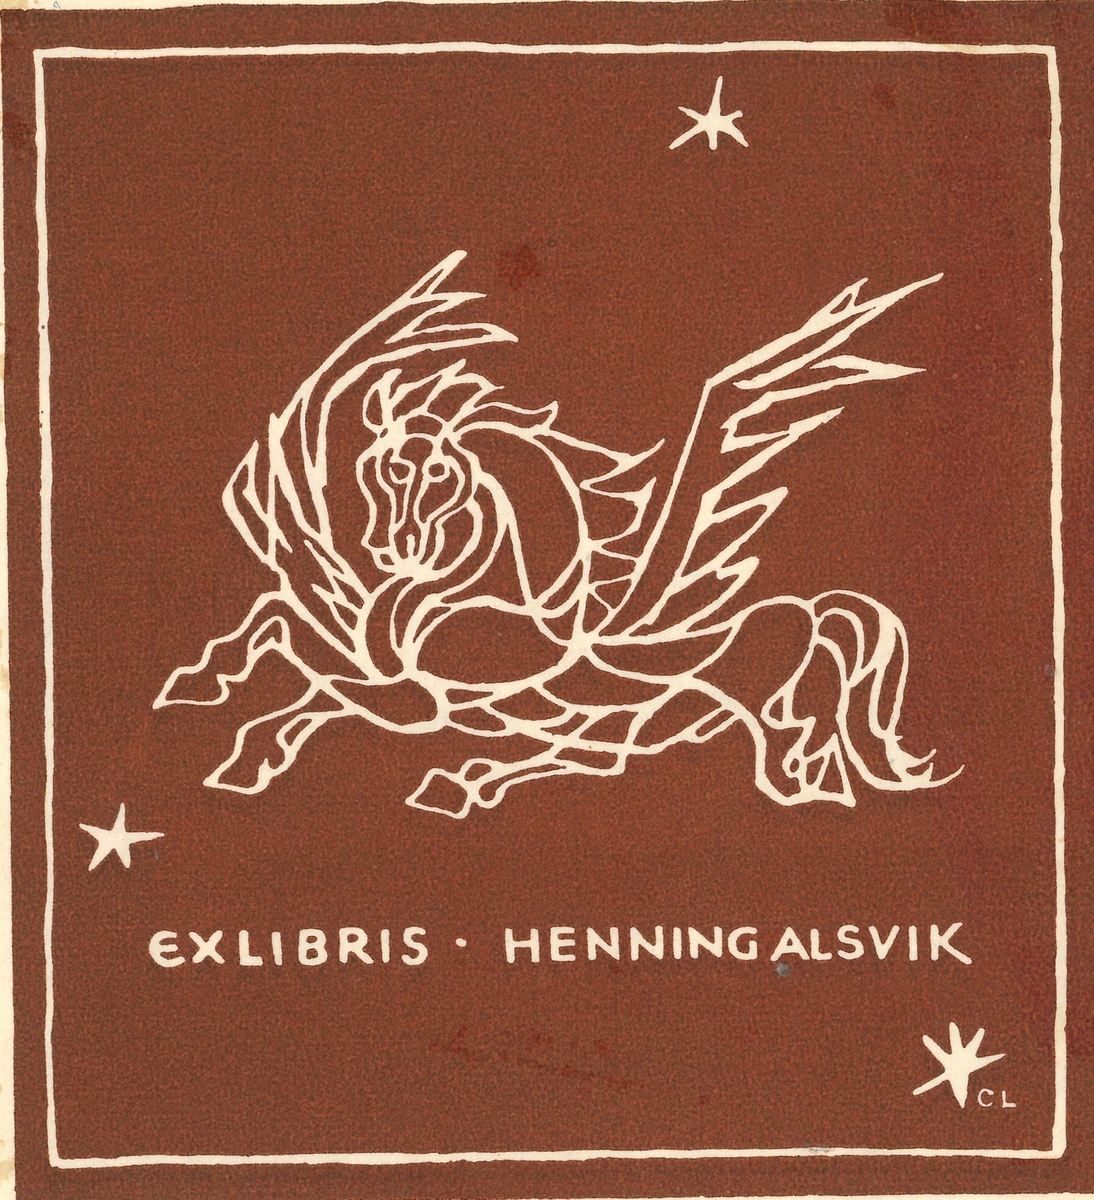 Ex libris for Henning Alsvik